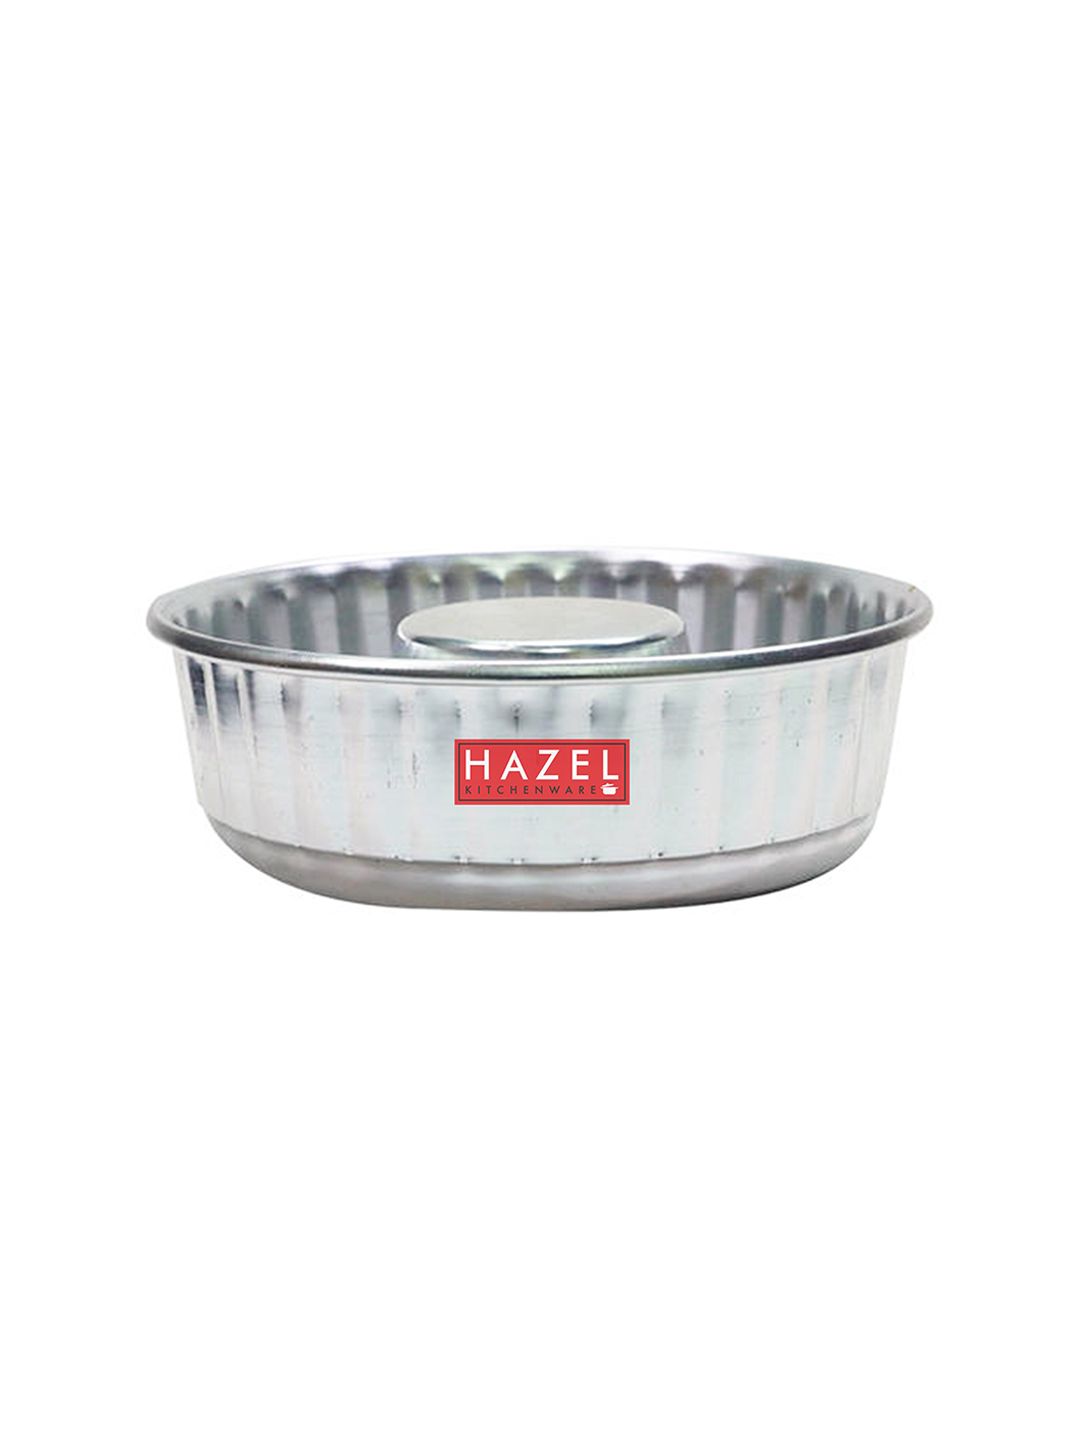 HAZEL Silver Toned Aluminium Donut Mould Price in India